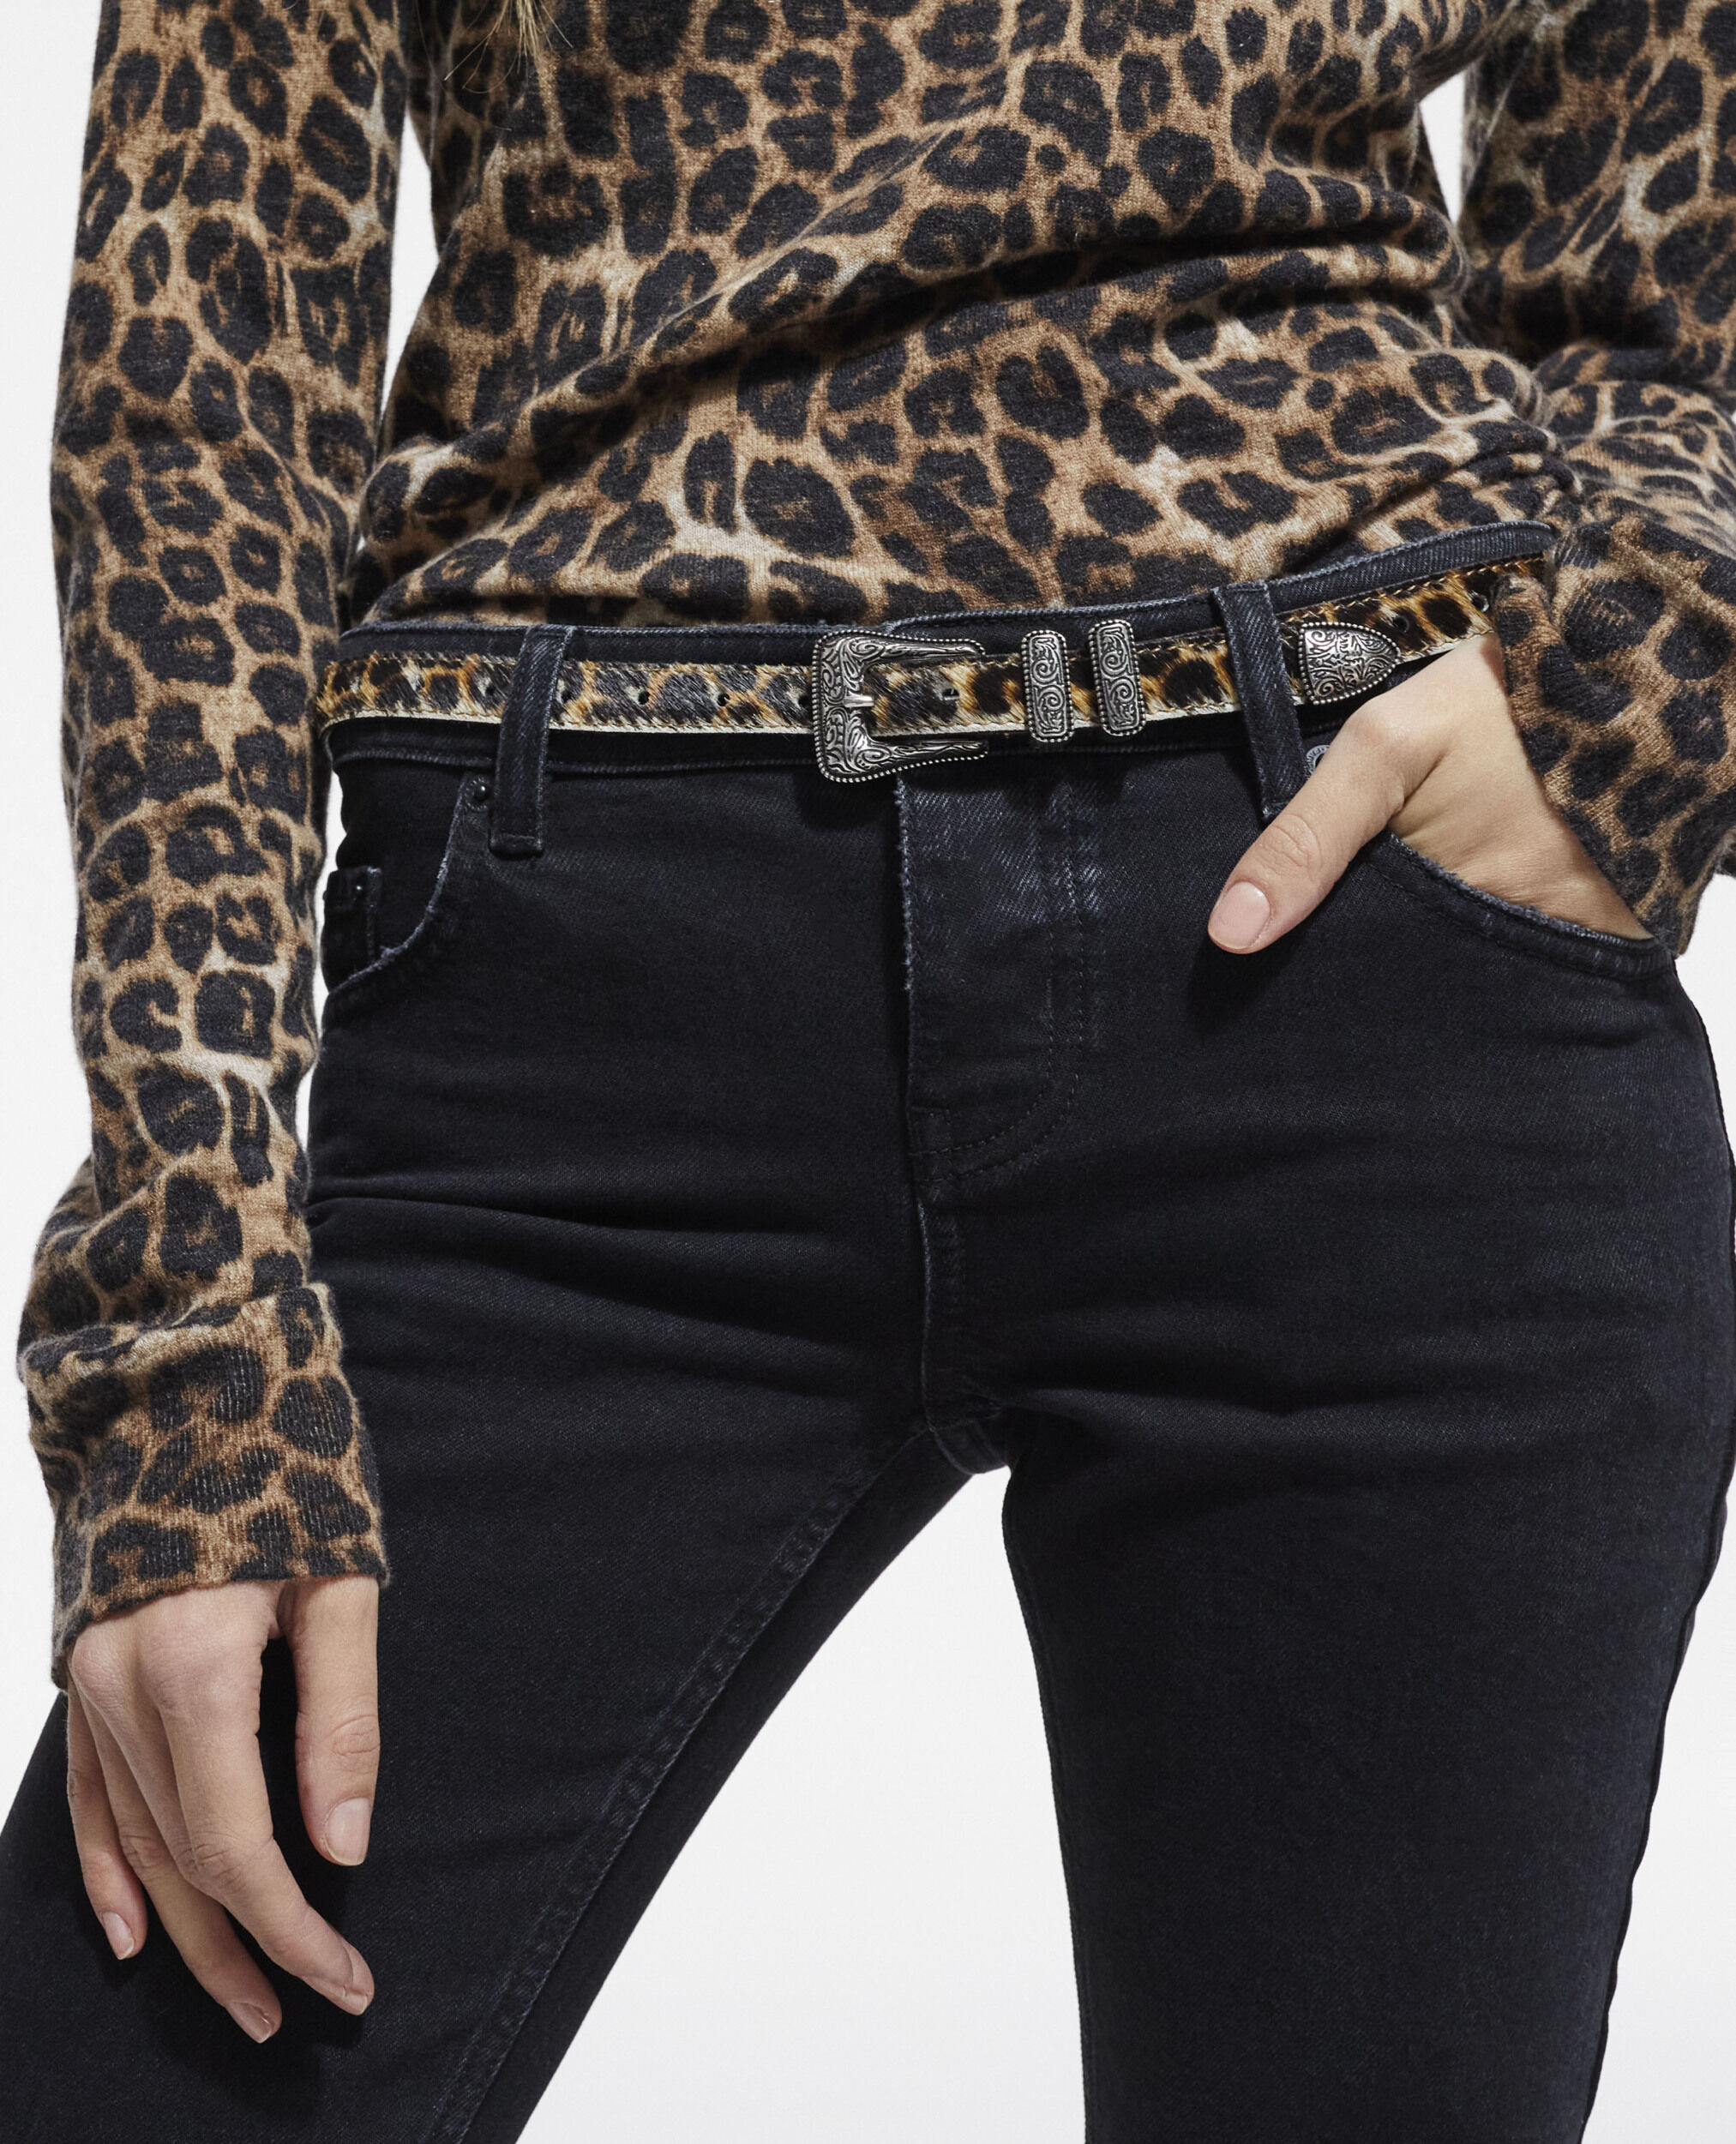 Thin leopard print leather belt, LEOPARD, hi-res image number null